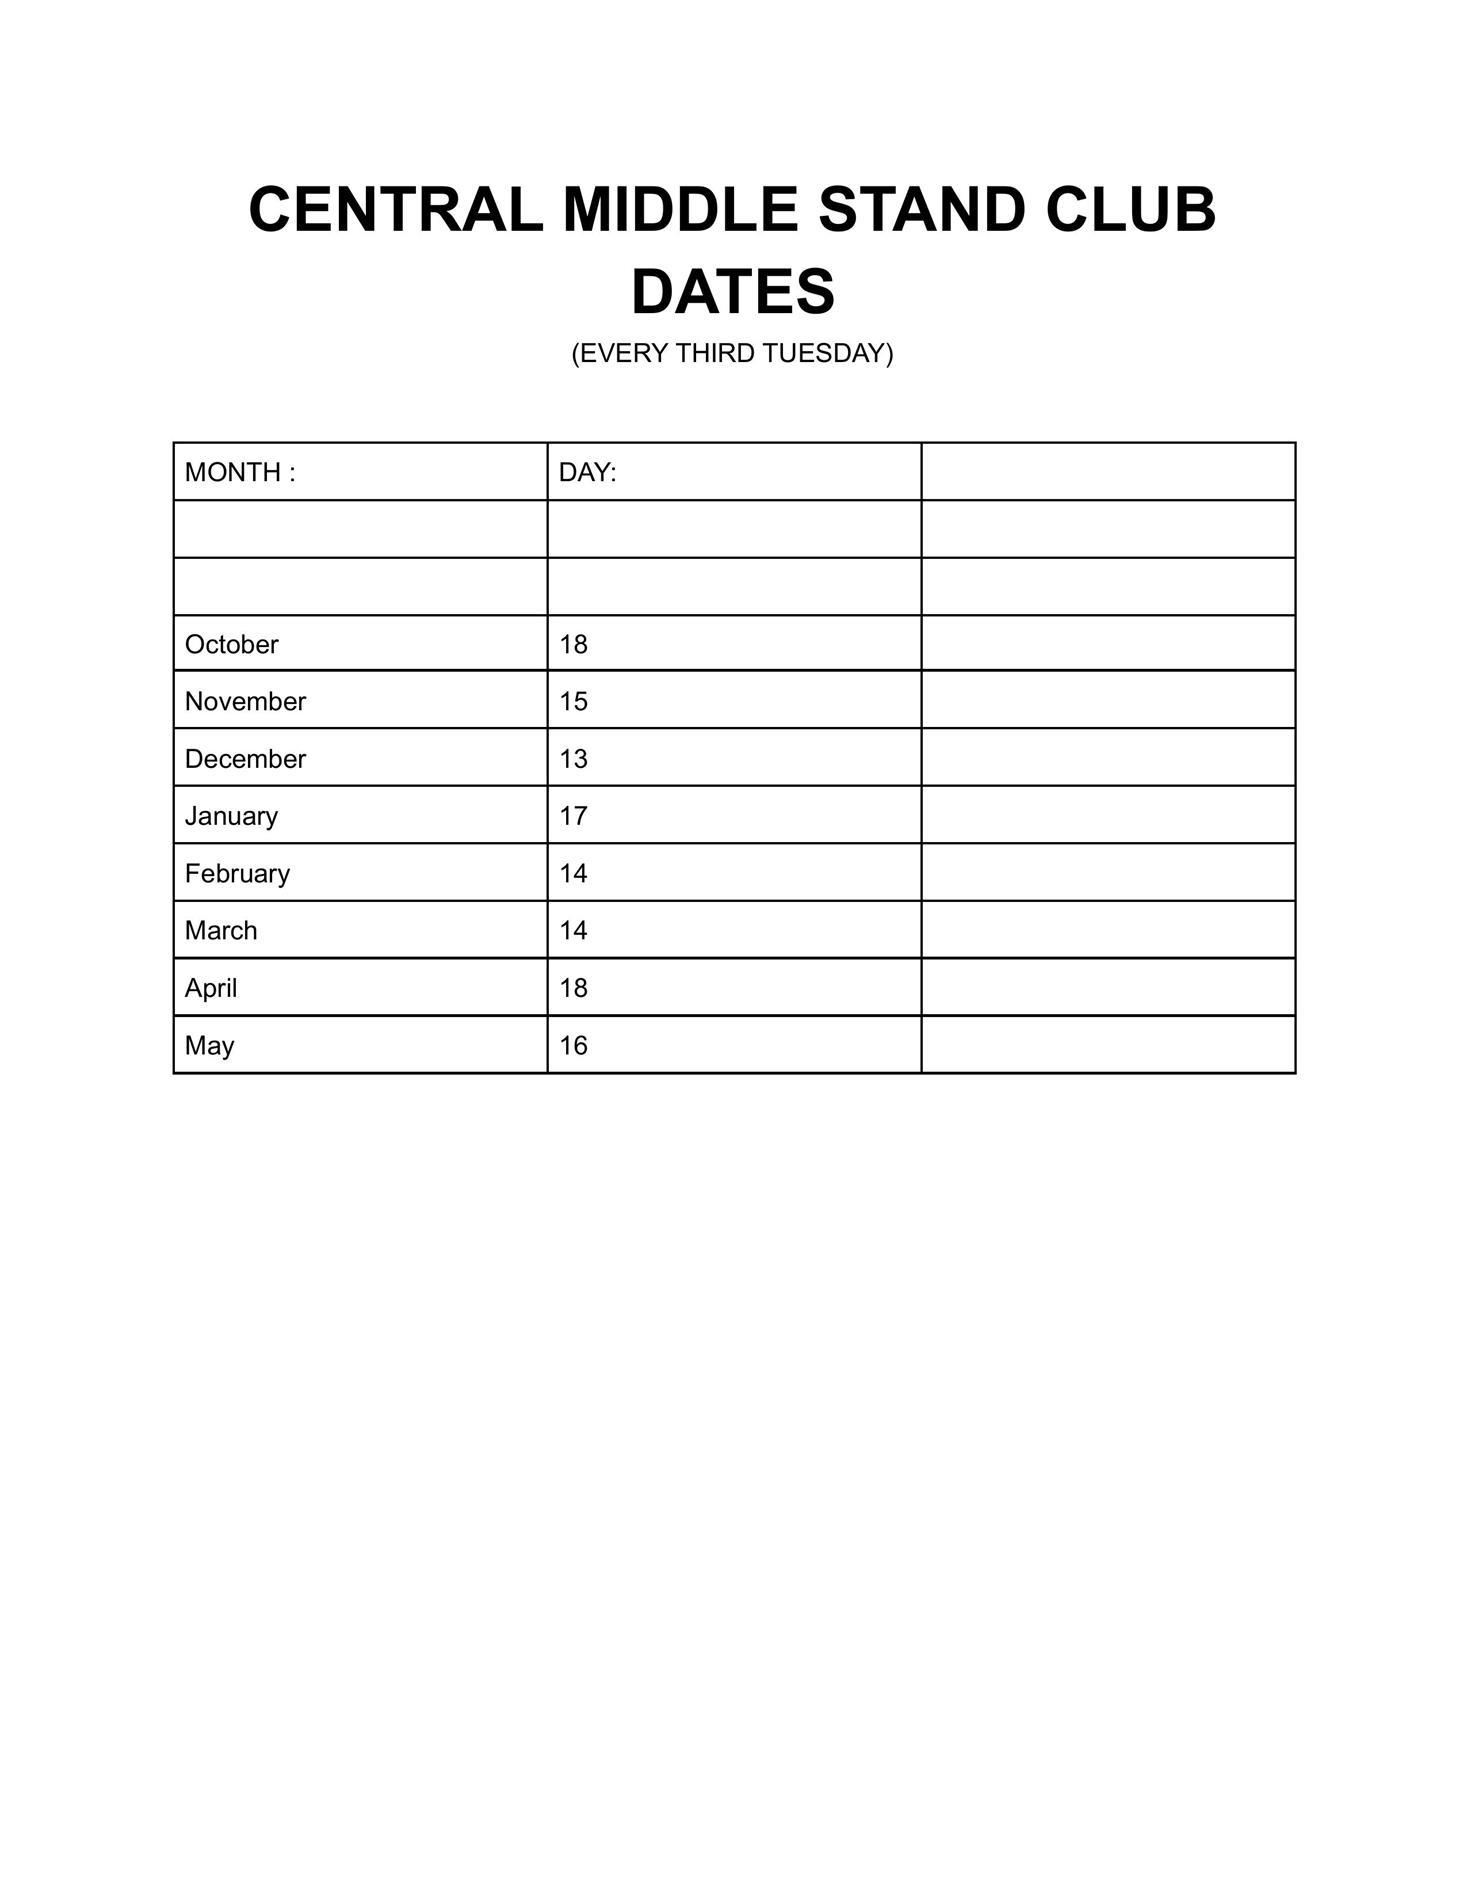 STAND Club dates